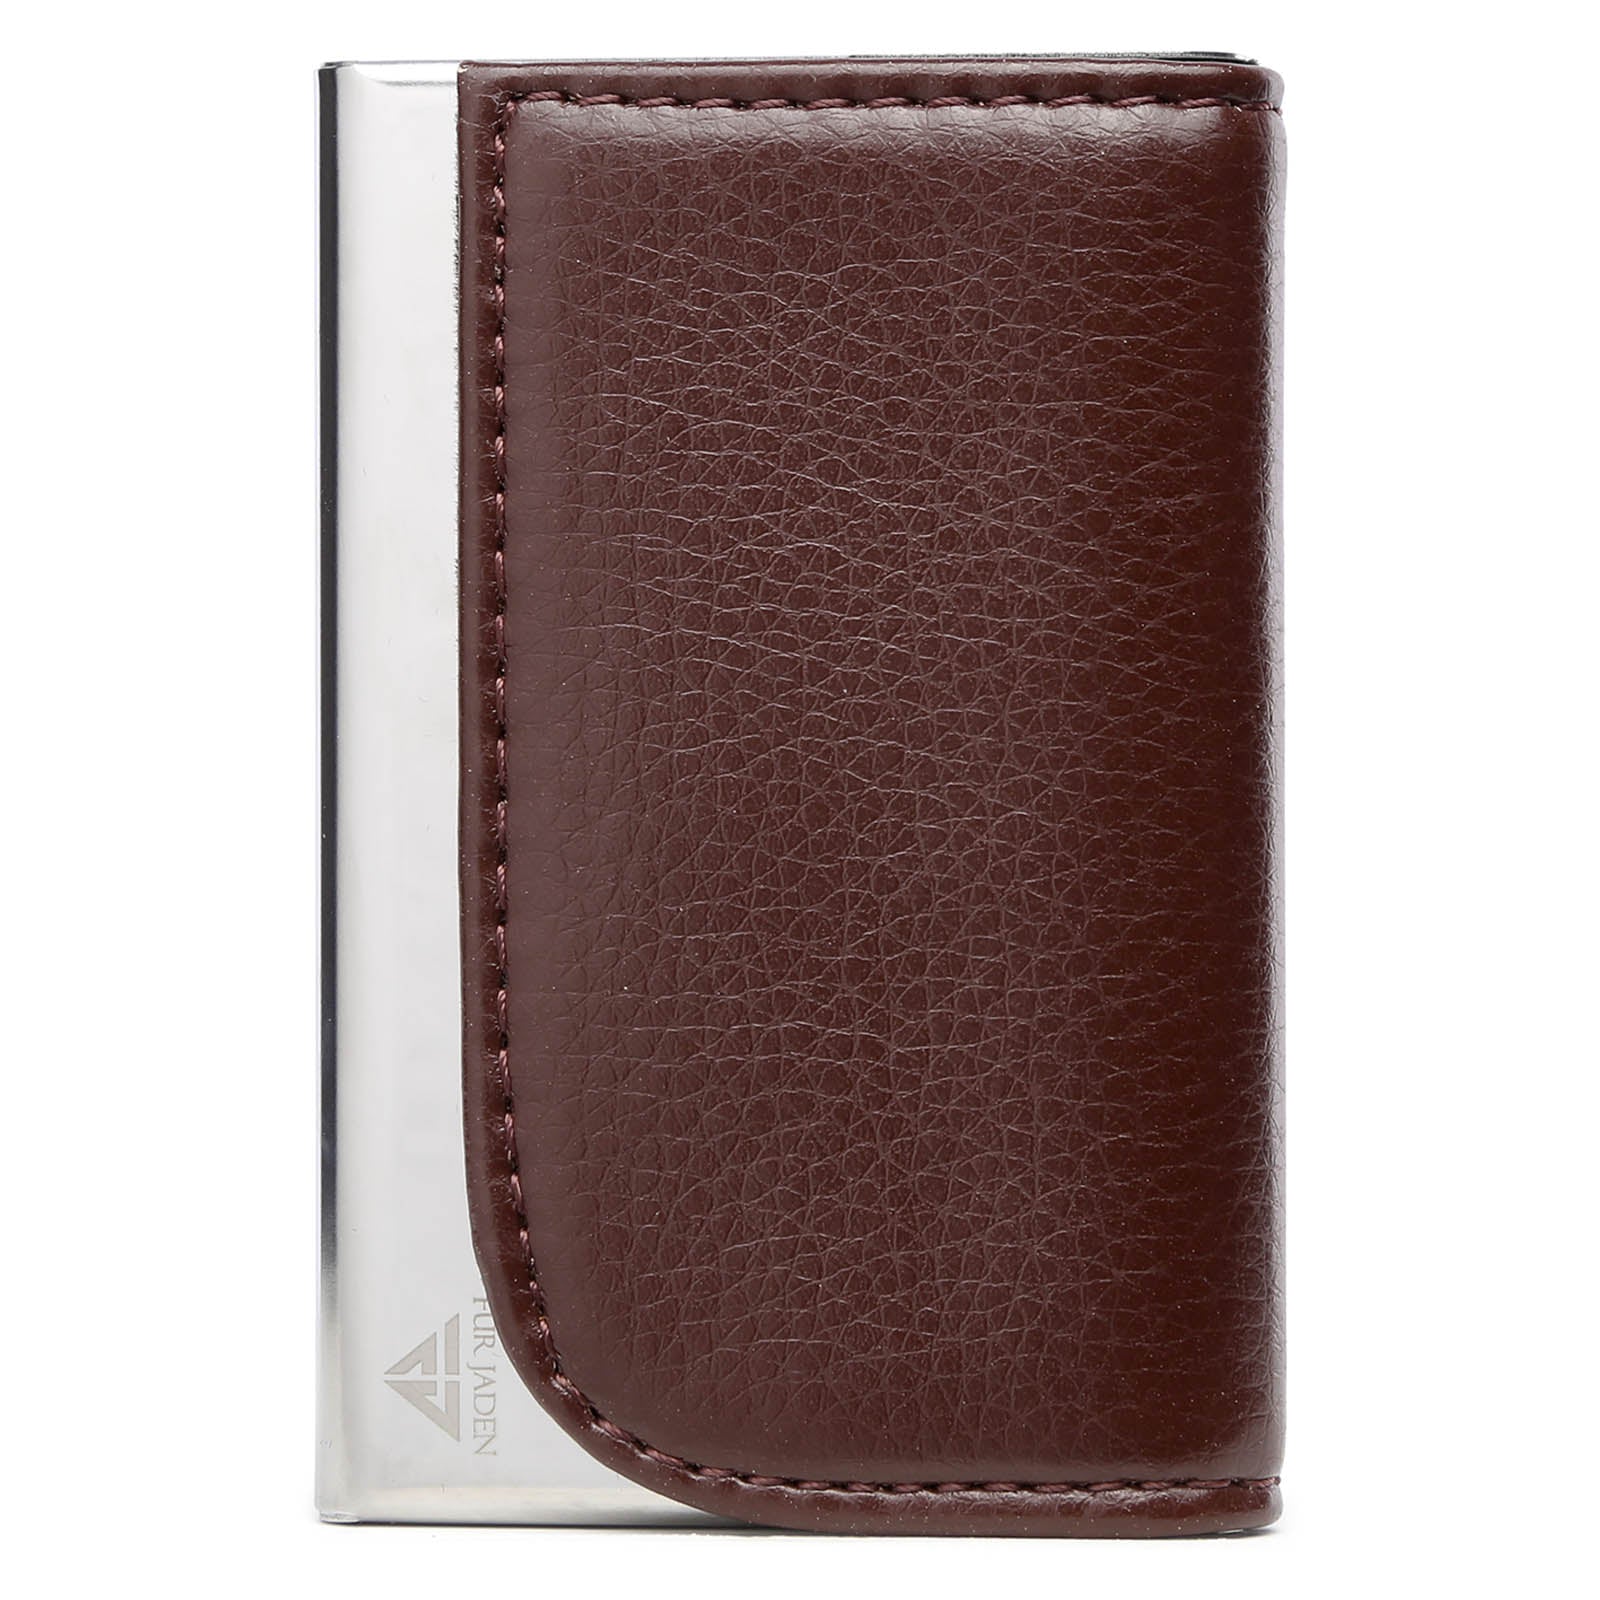 Comfortlix Women's PU Leather Card Holder Wallet